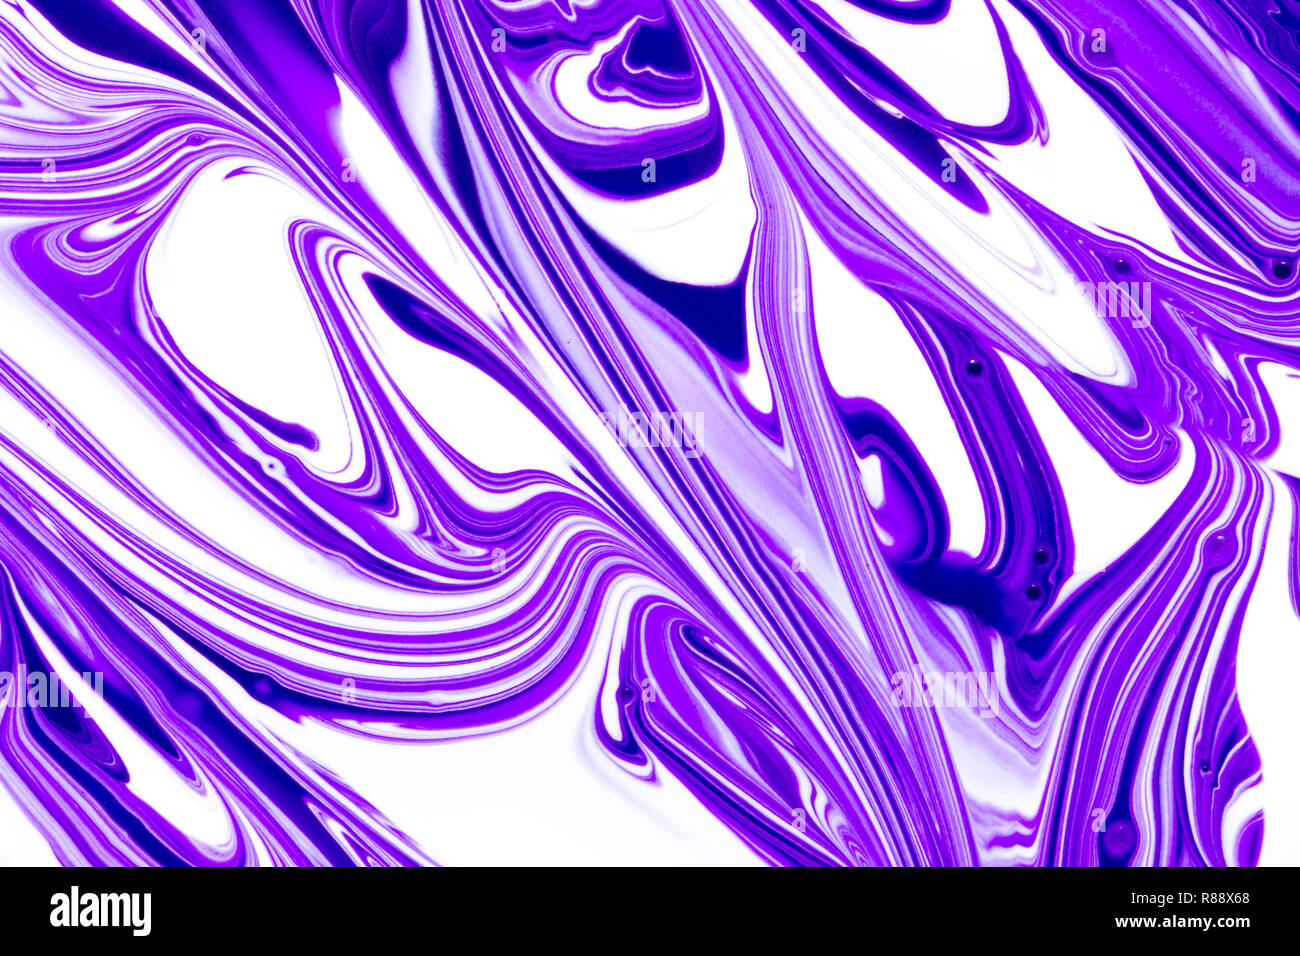 Abstract background of purple and white liquid paint swirls Stock Photo -  Alamy